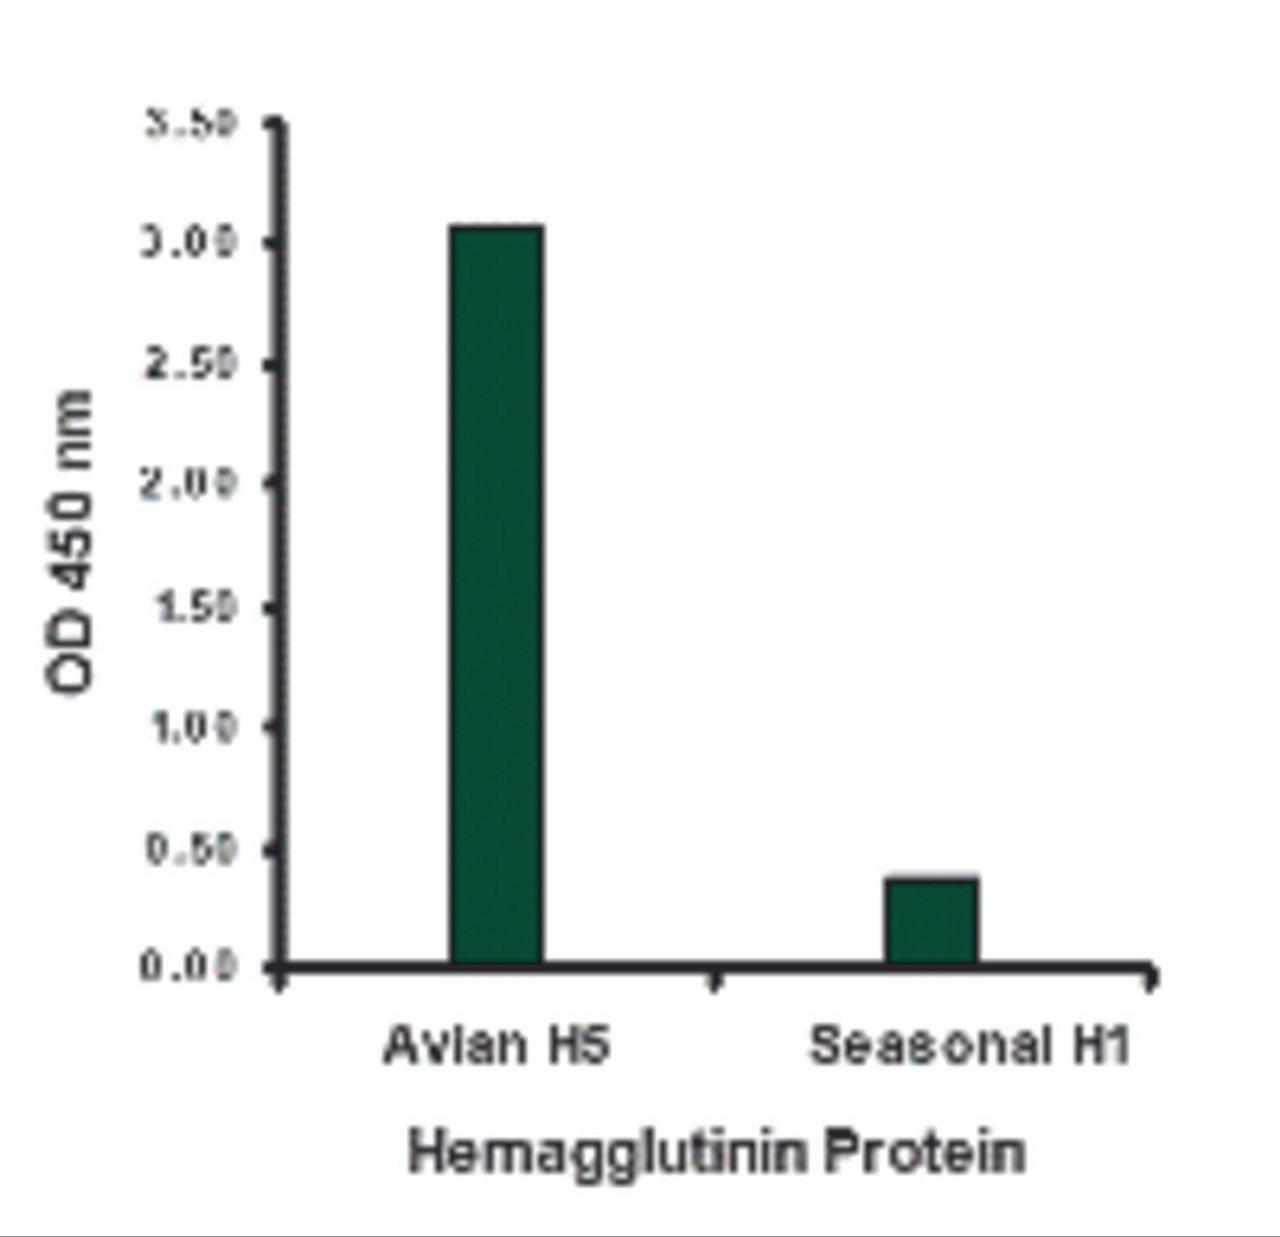 Hemagglutinin antibody at 1 &#956;g/mL specifically recognizes Avian H5N1 influenza virus but not seasonal influenza virus A H1N1 Hemagglutinin protein.